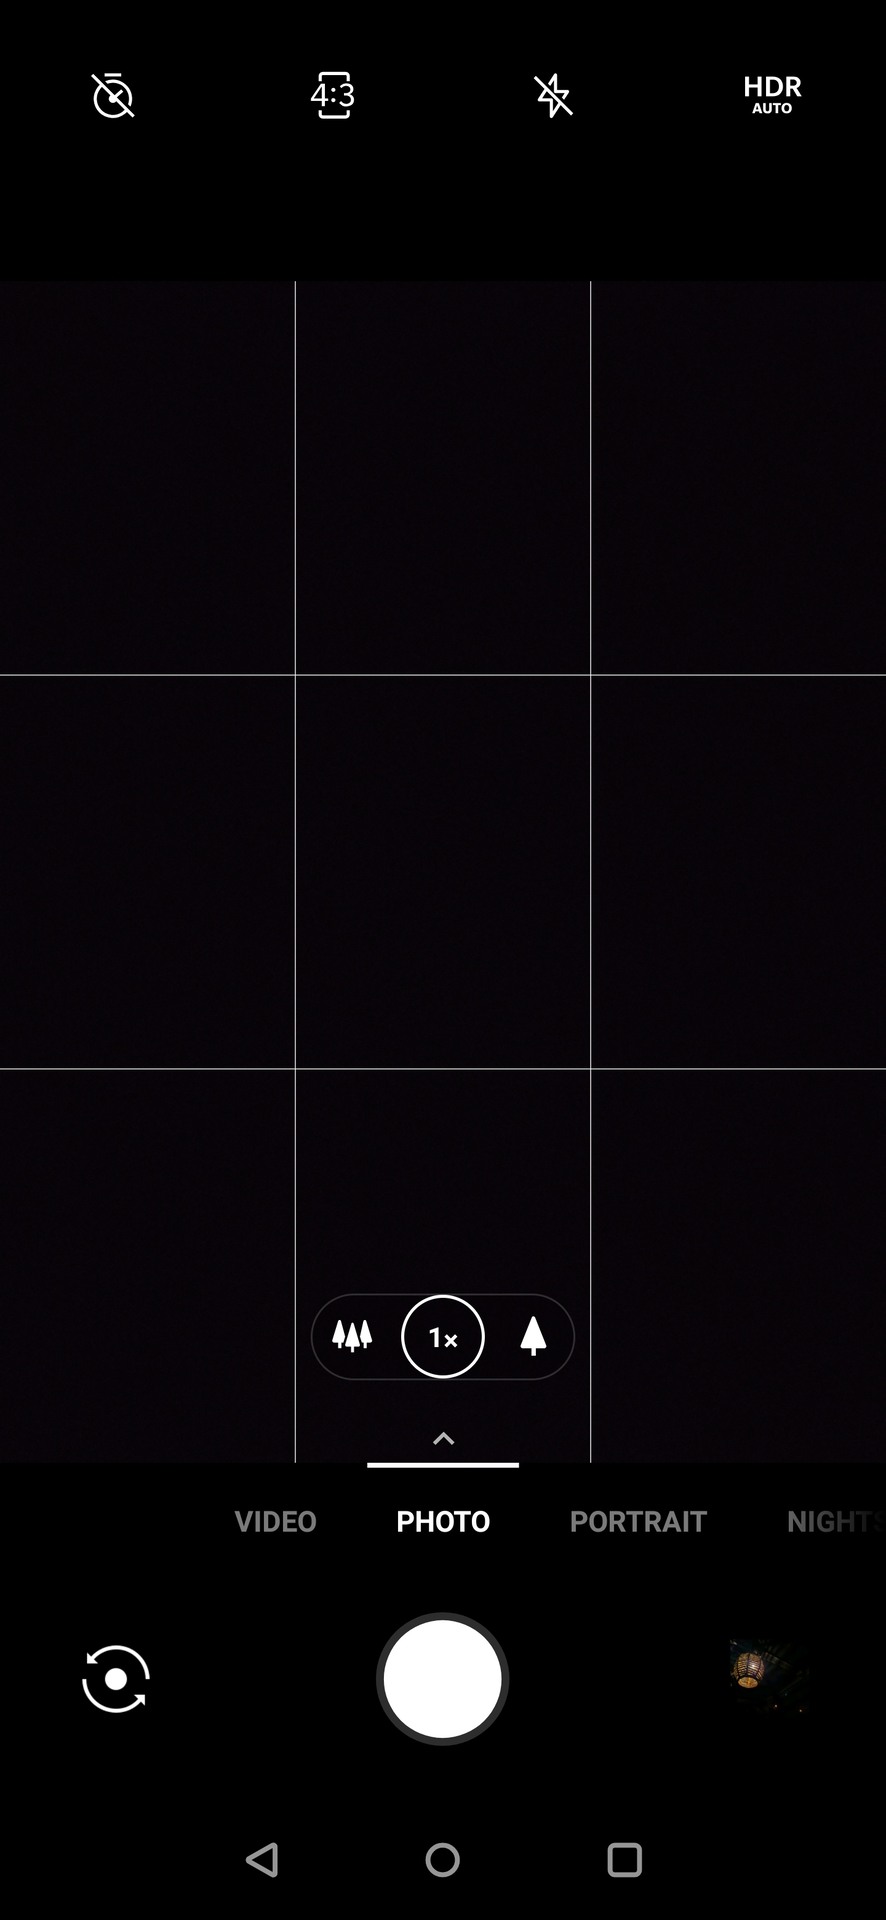 OnePlus 7 Pro default camera app